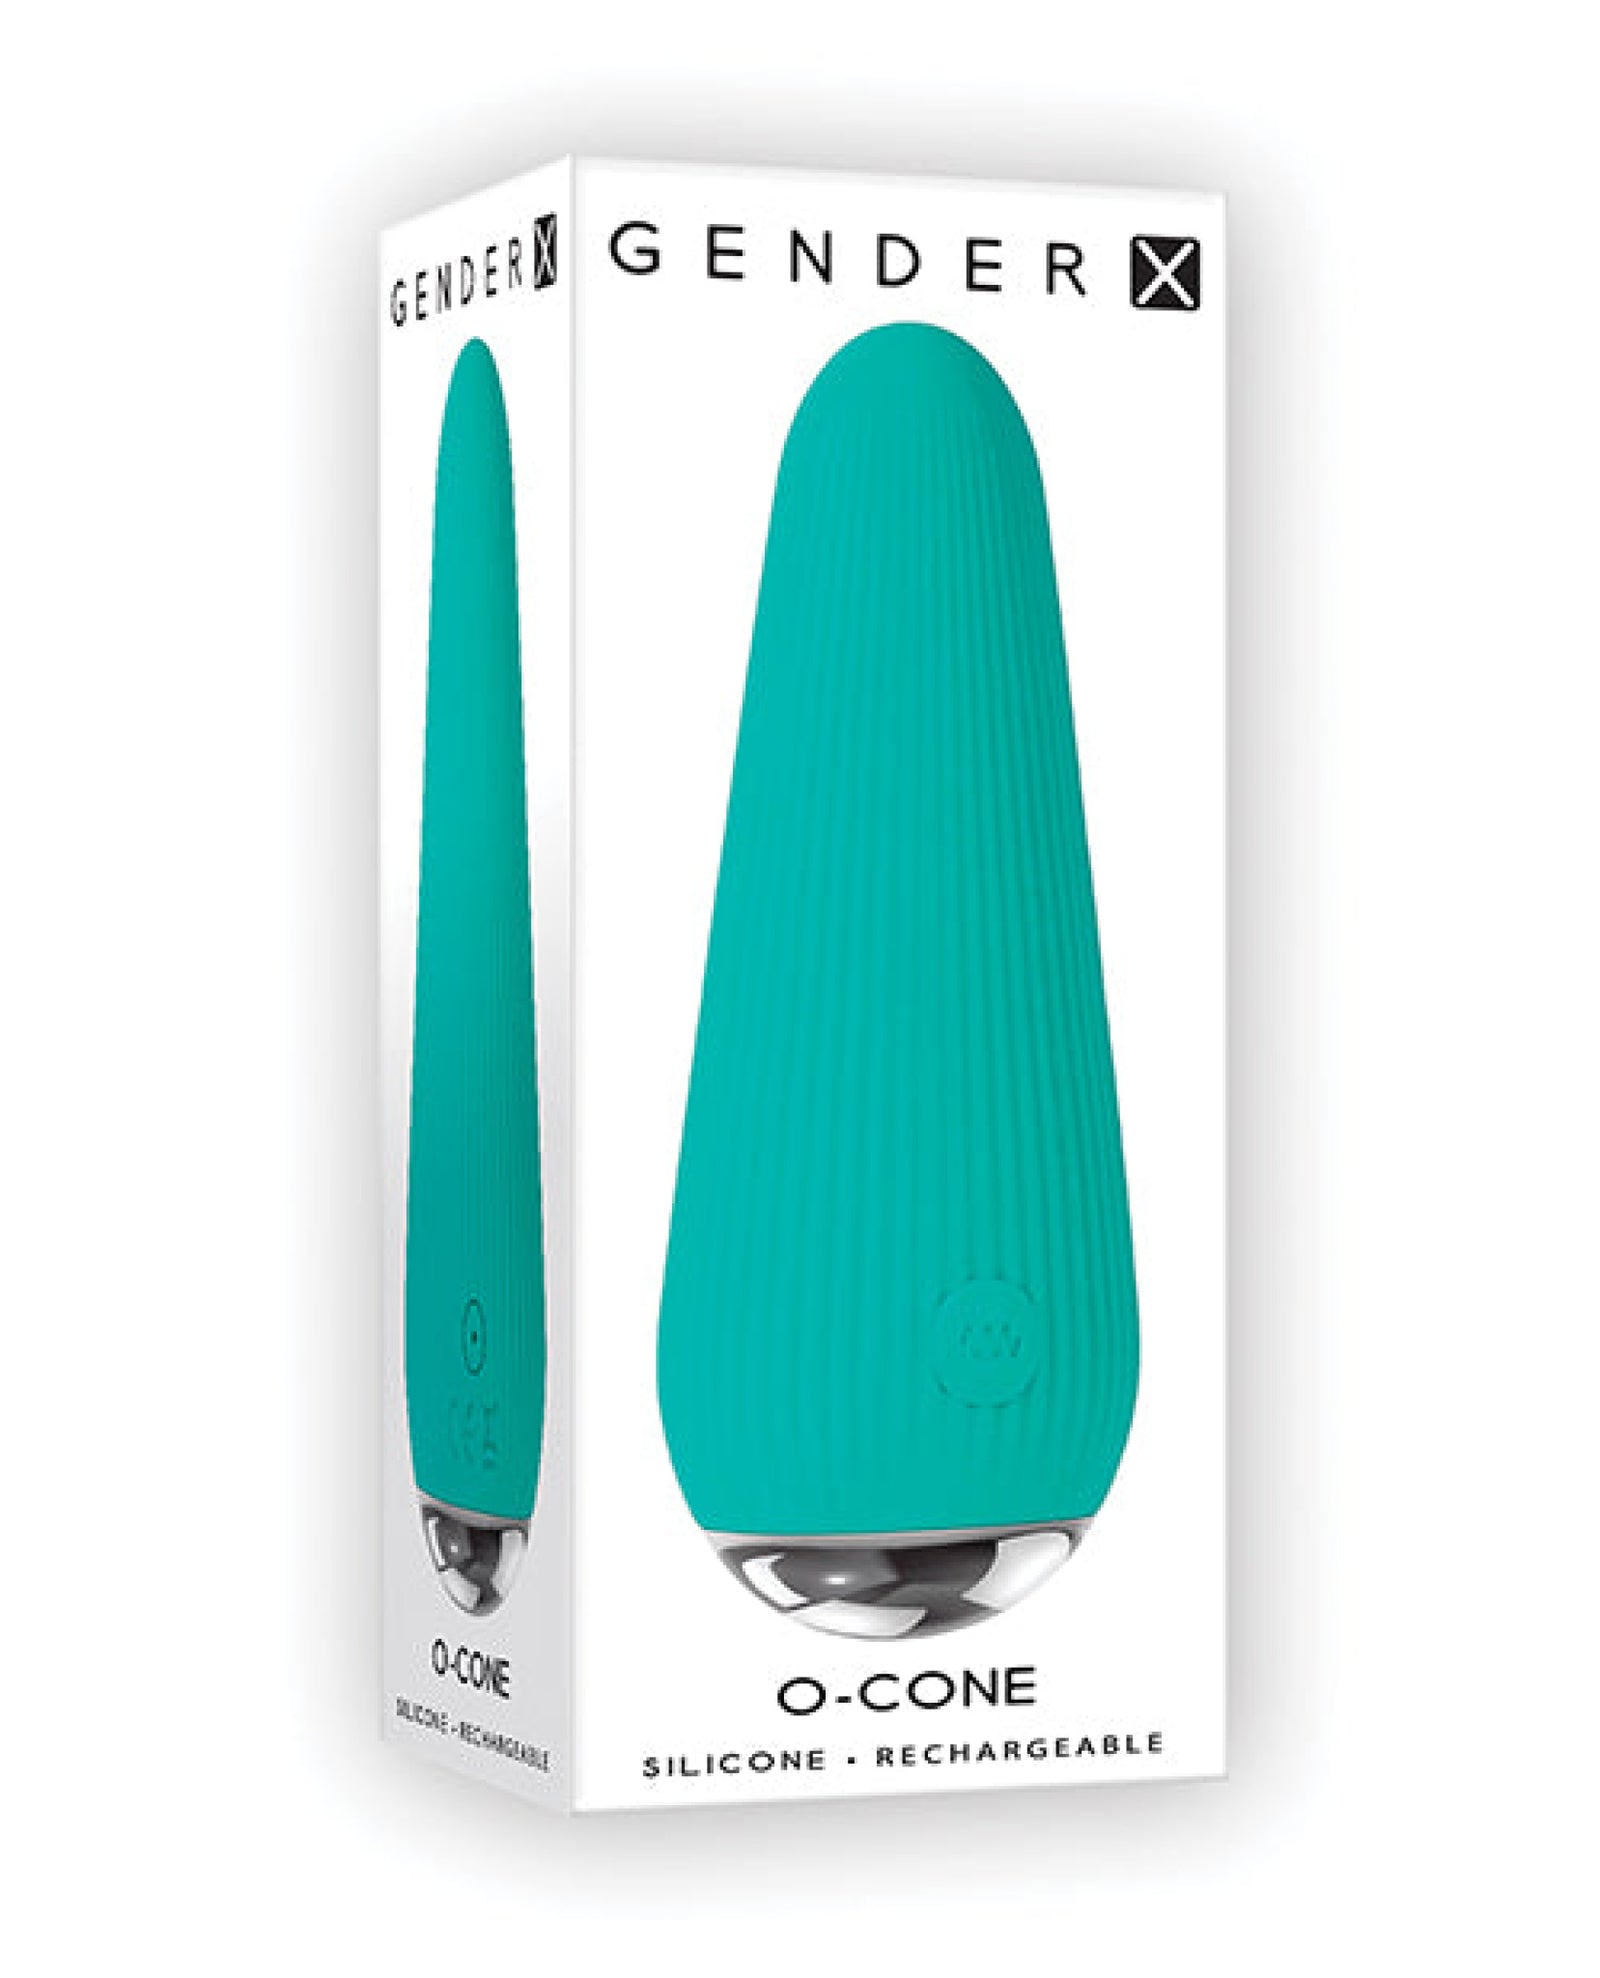 Gender X O-cone - Teal Gender X